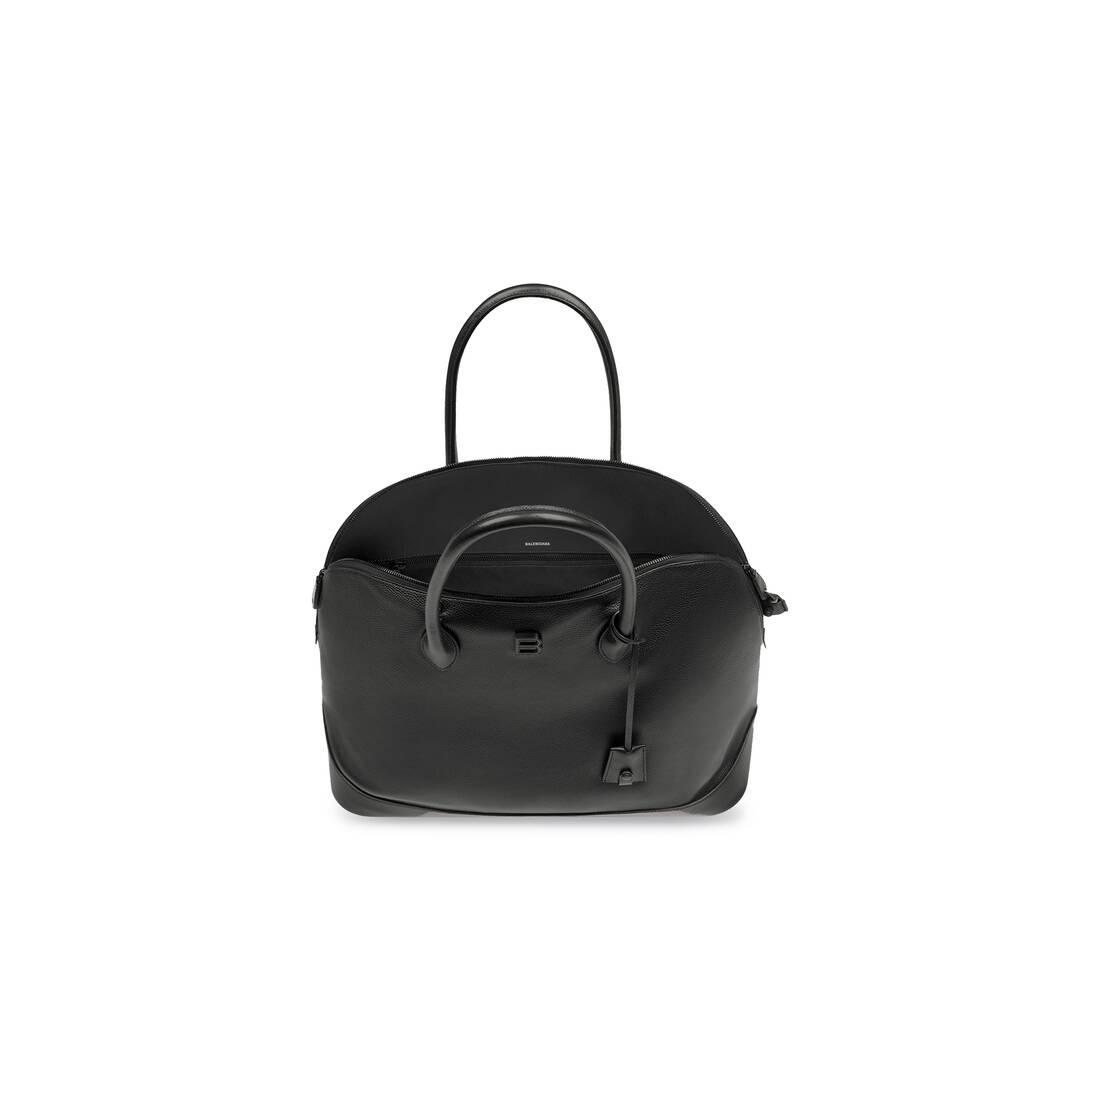 Balenciaga Logo Projector Large Handbag in Black